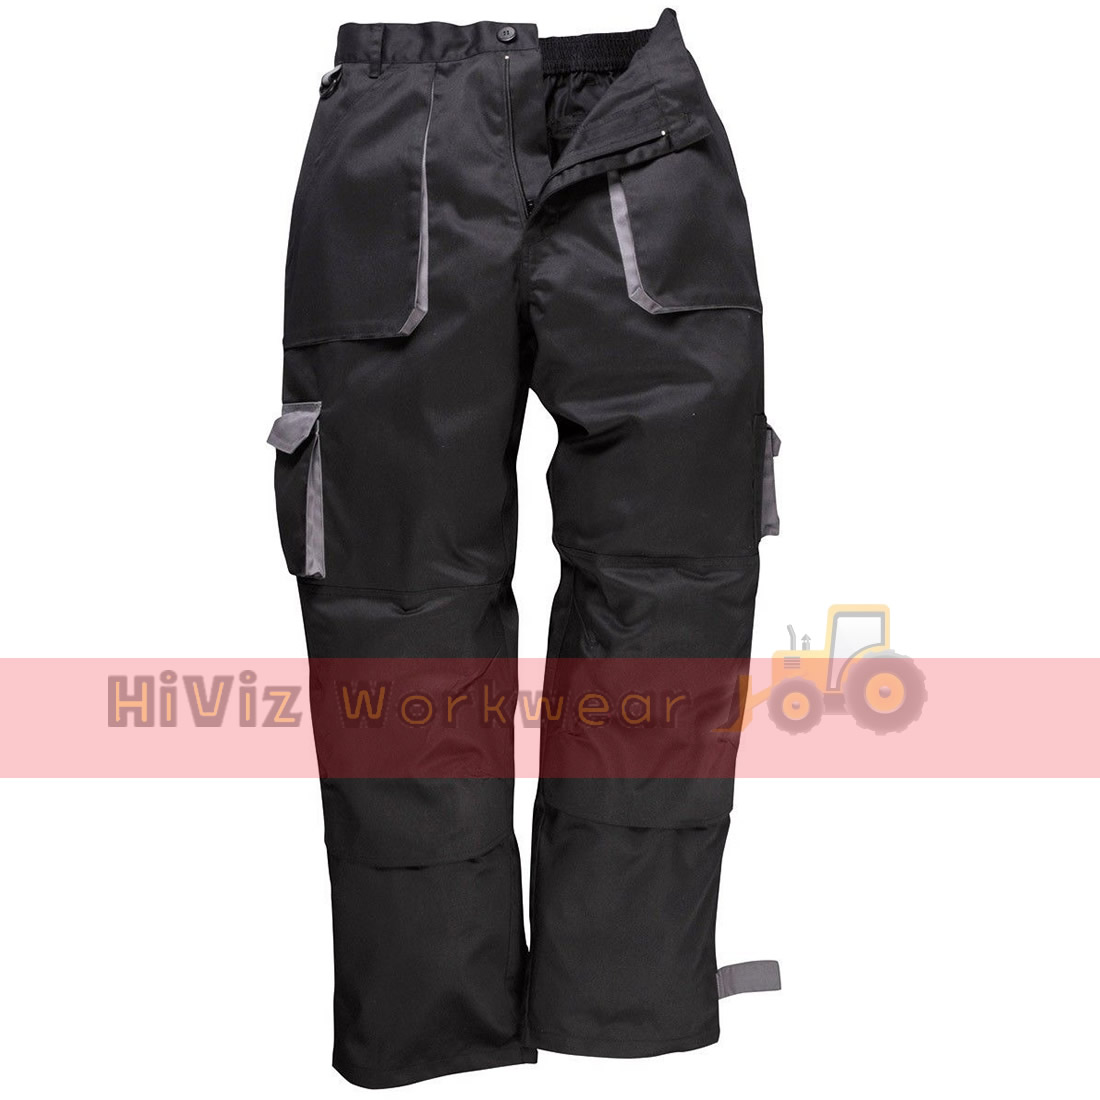 Texo TX11 Work Trousers Pants Knee Pad Pockets Half Elastic Waist Workwear S-4XL 